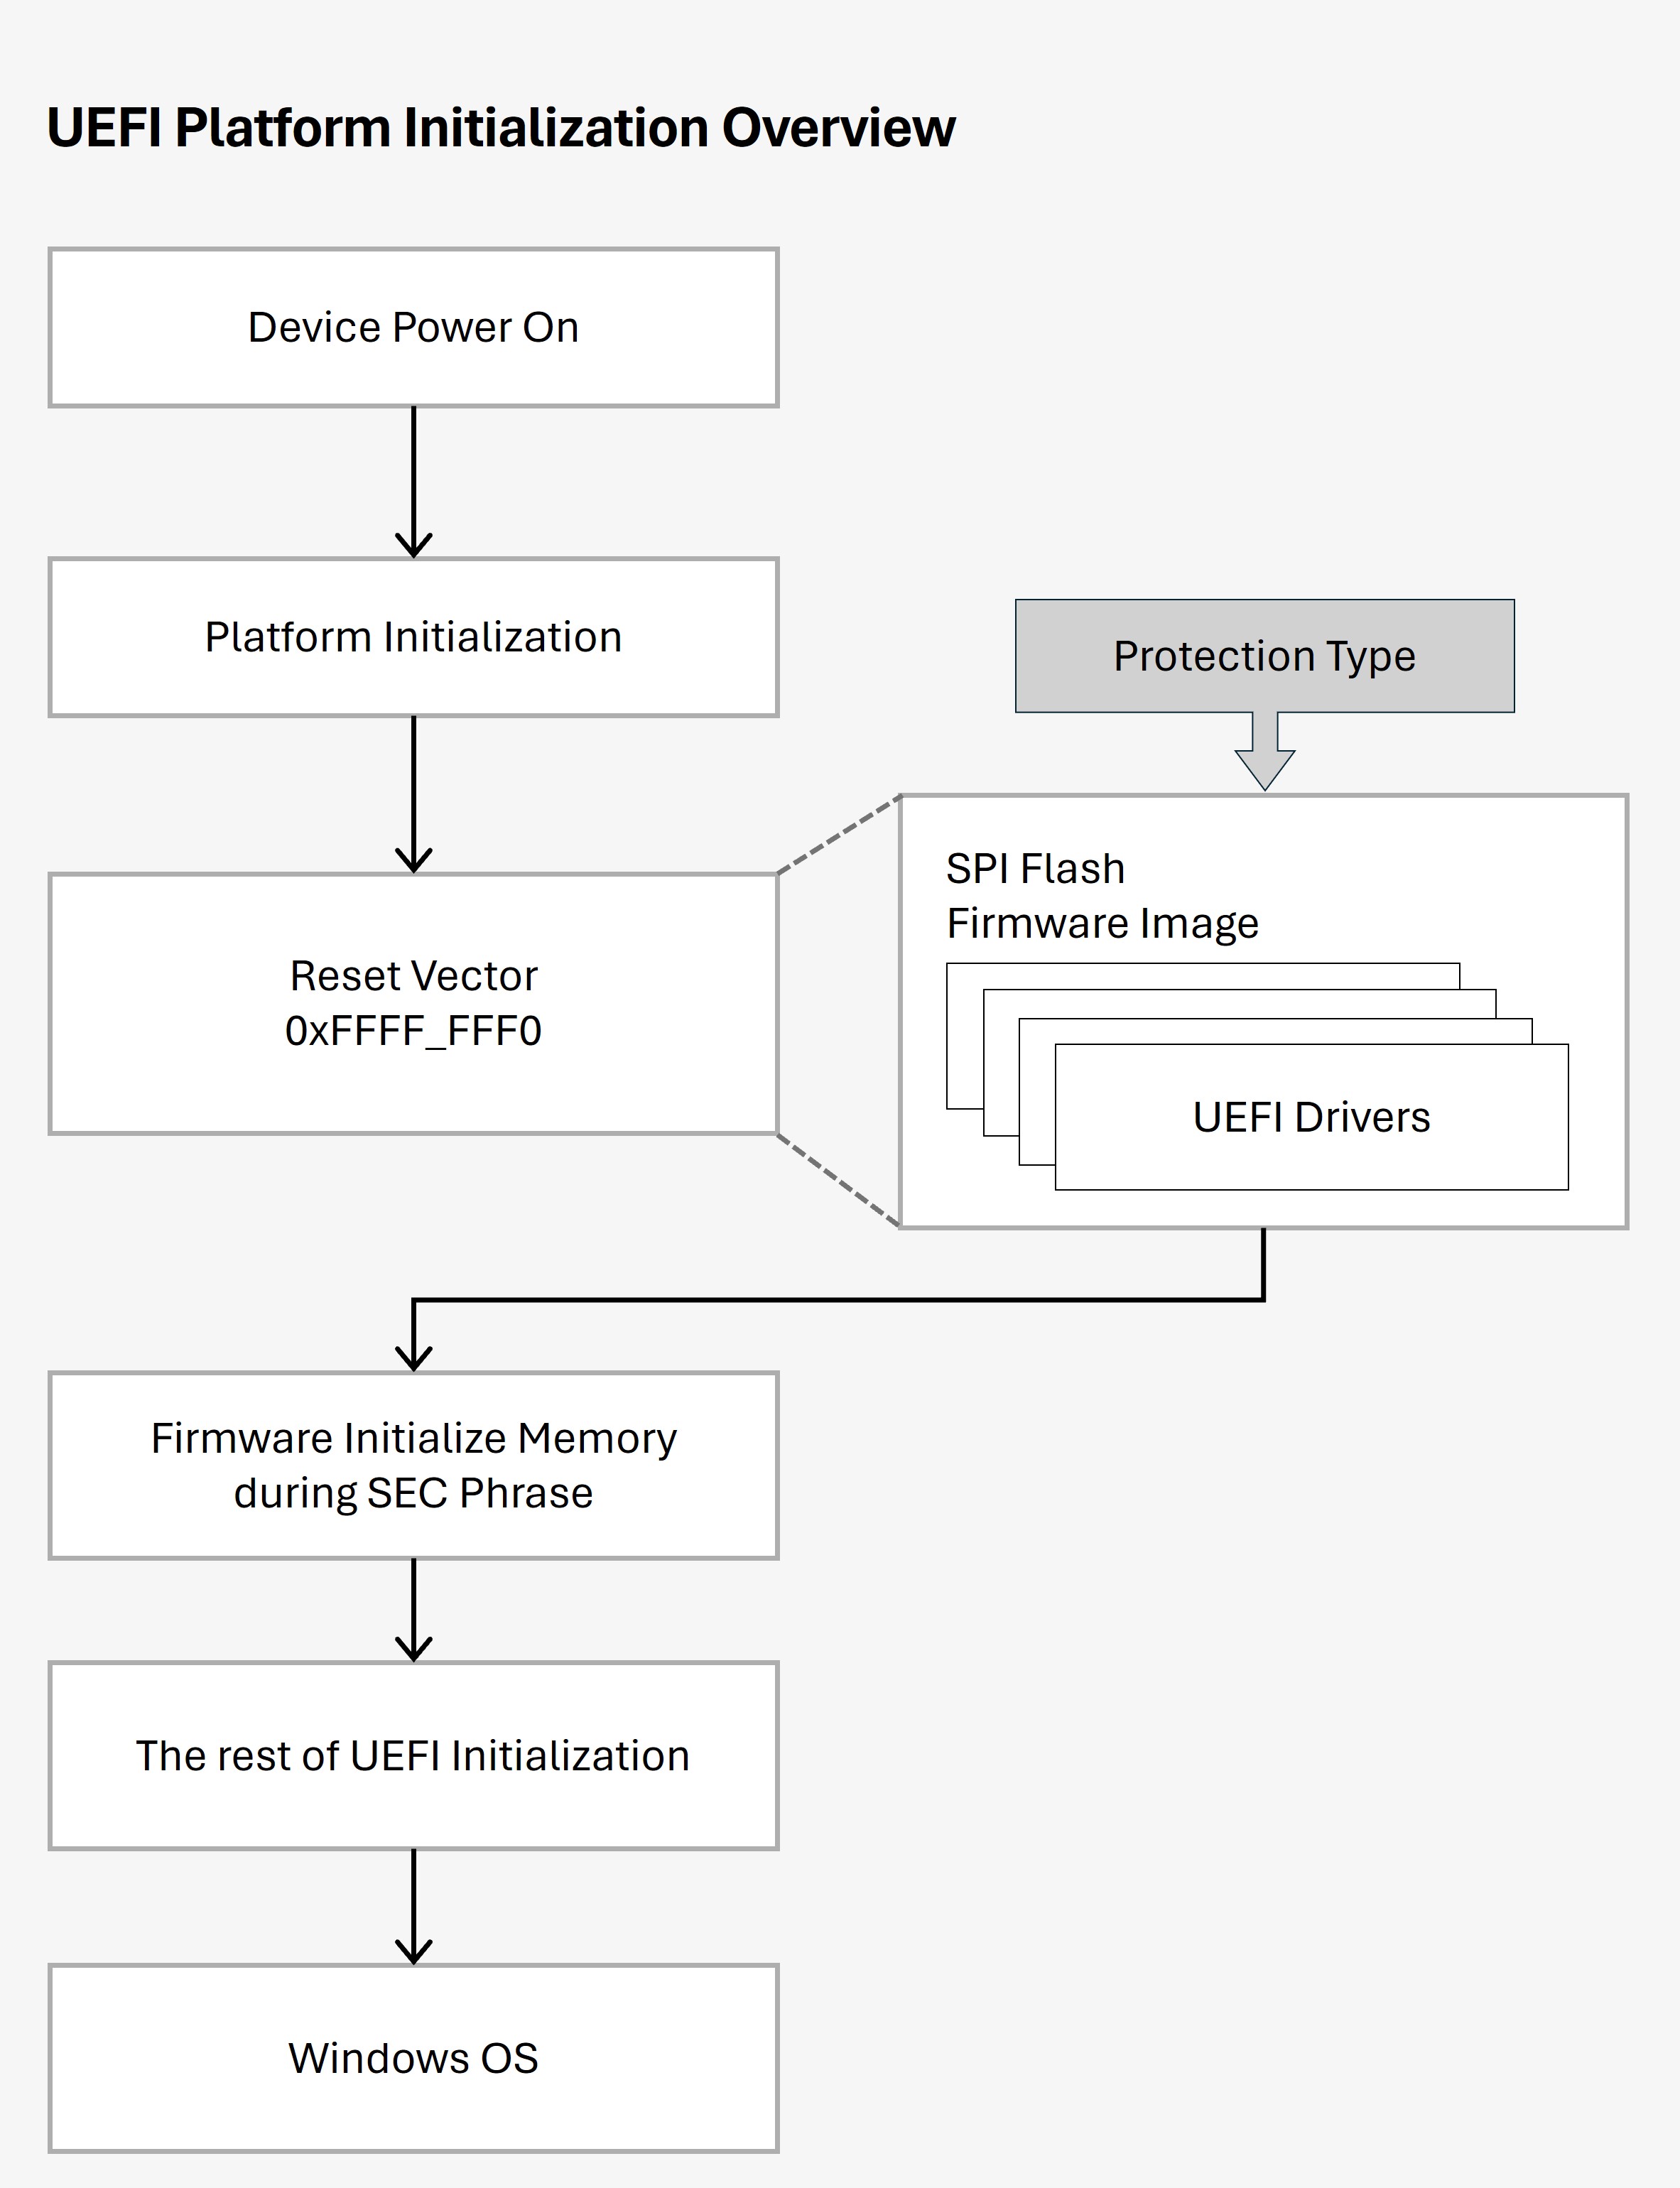 UEFI platform initialization